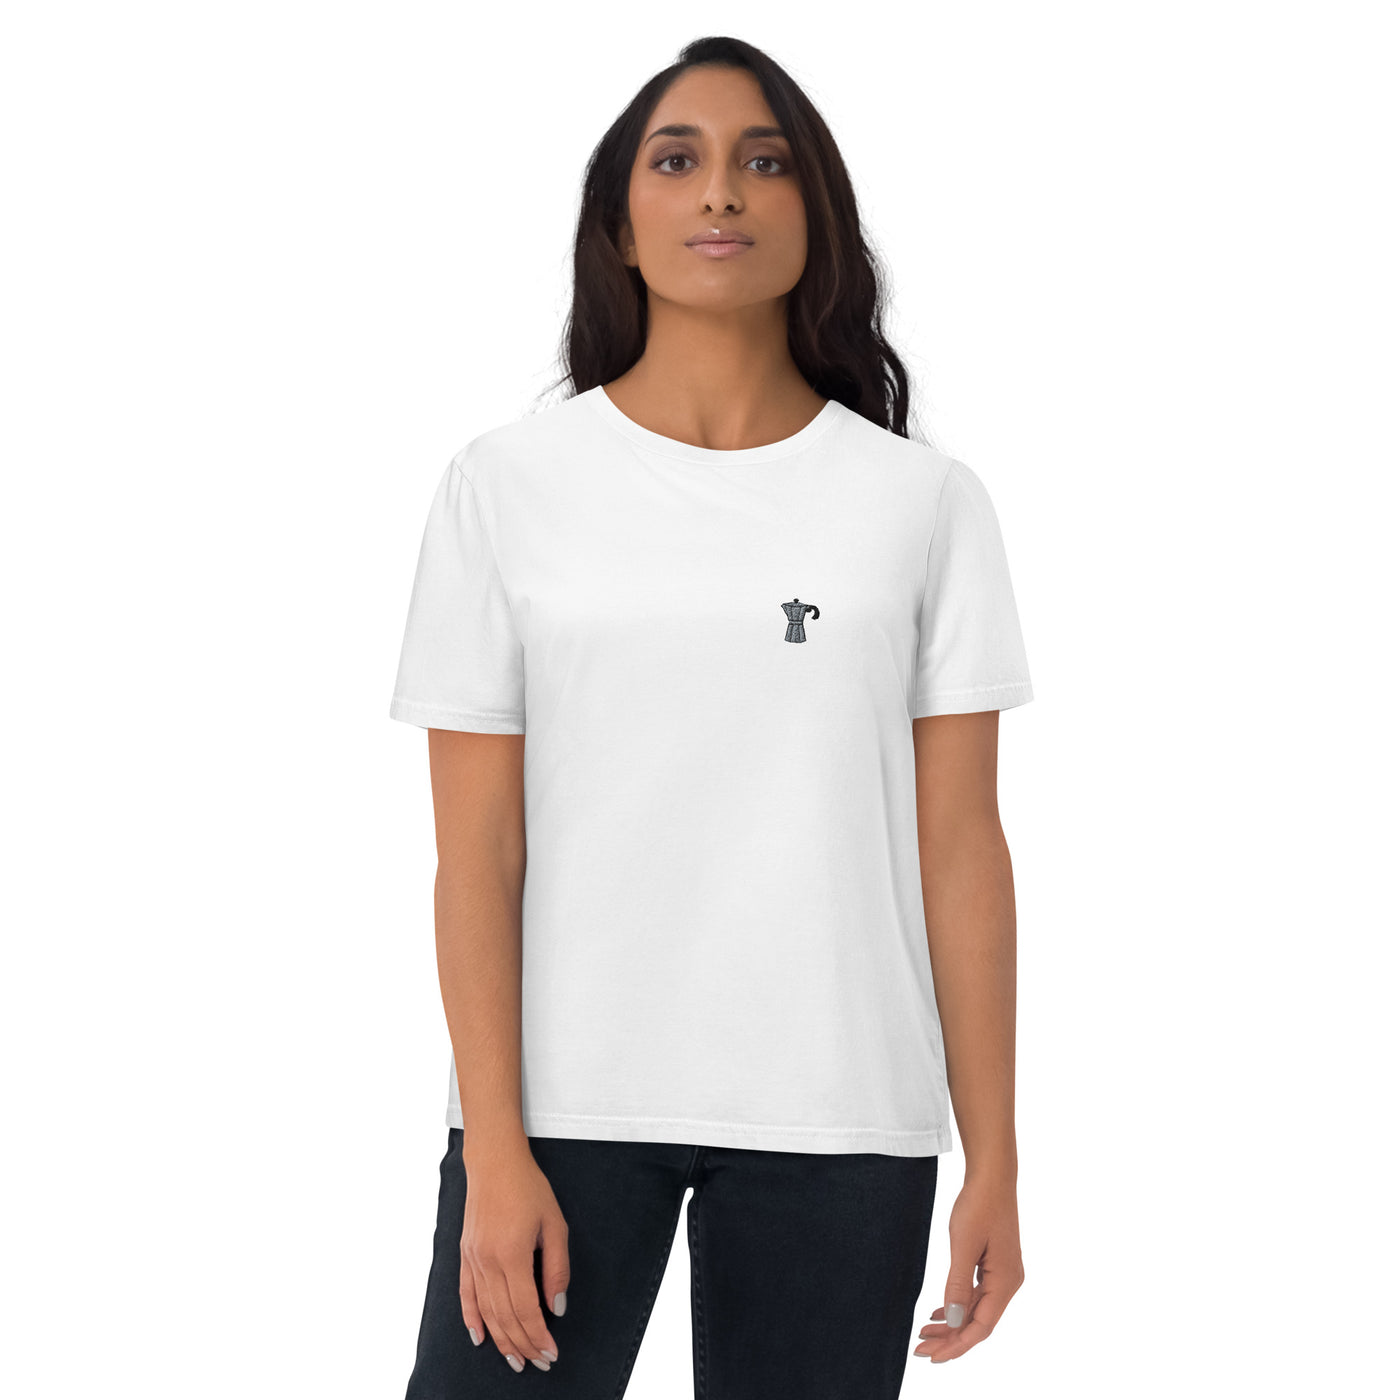 Camiseta Moka Italiana unisex